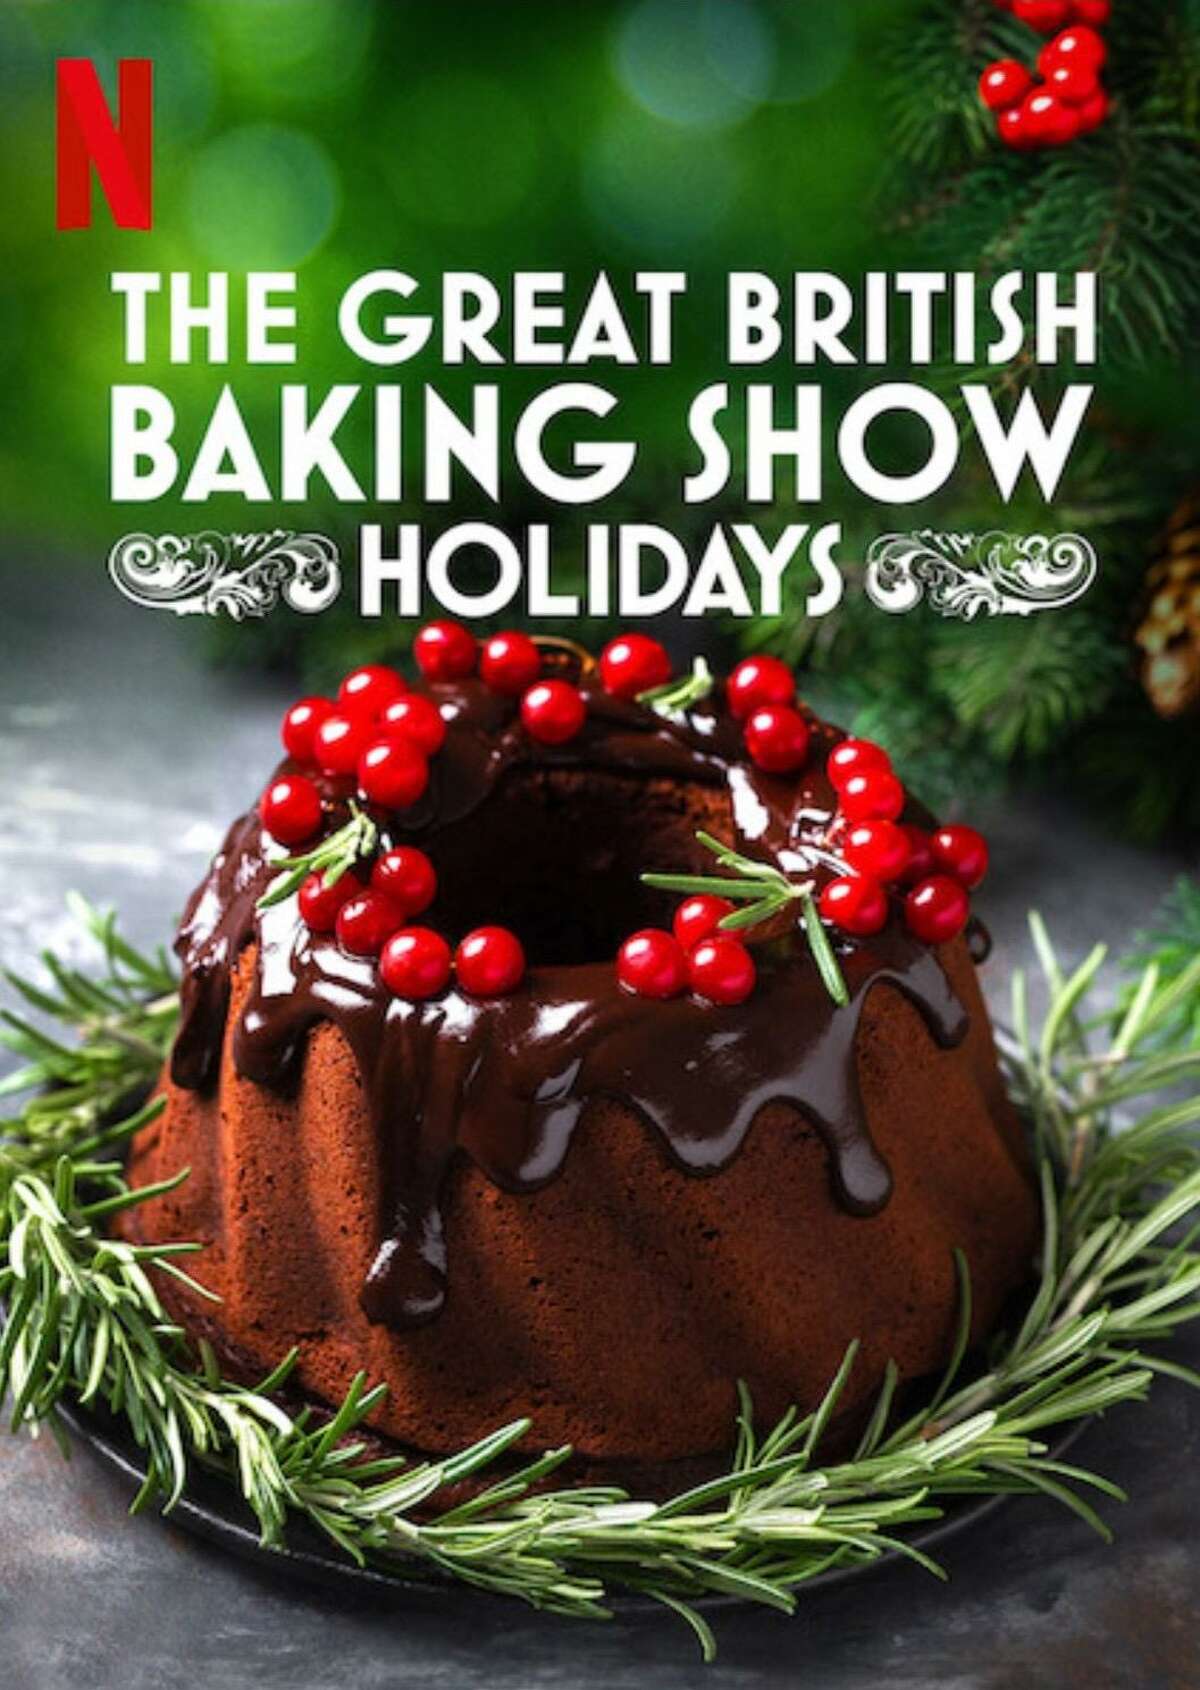 Netflix has three seasons of “The Great British Baking Show: Holidays.”